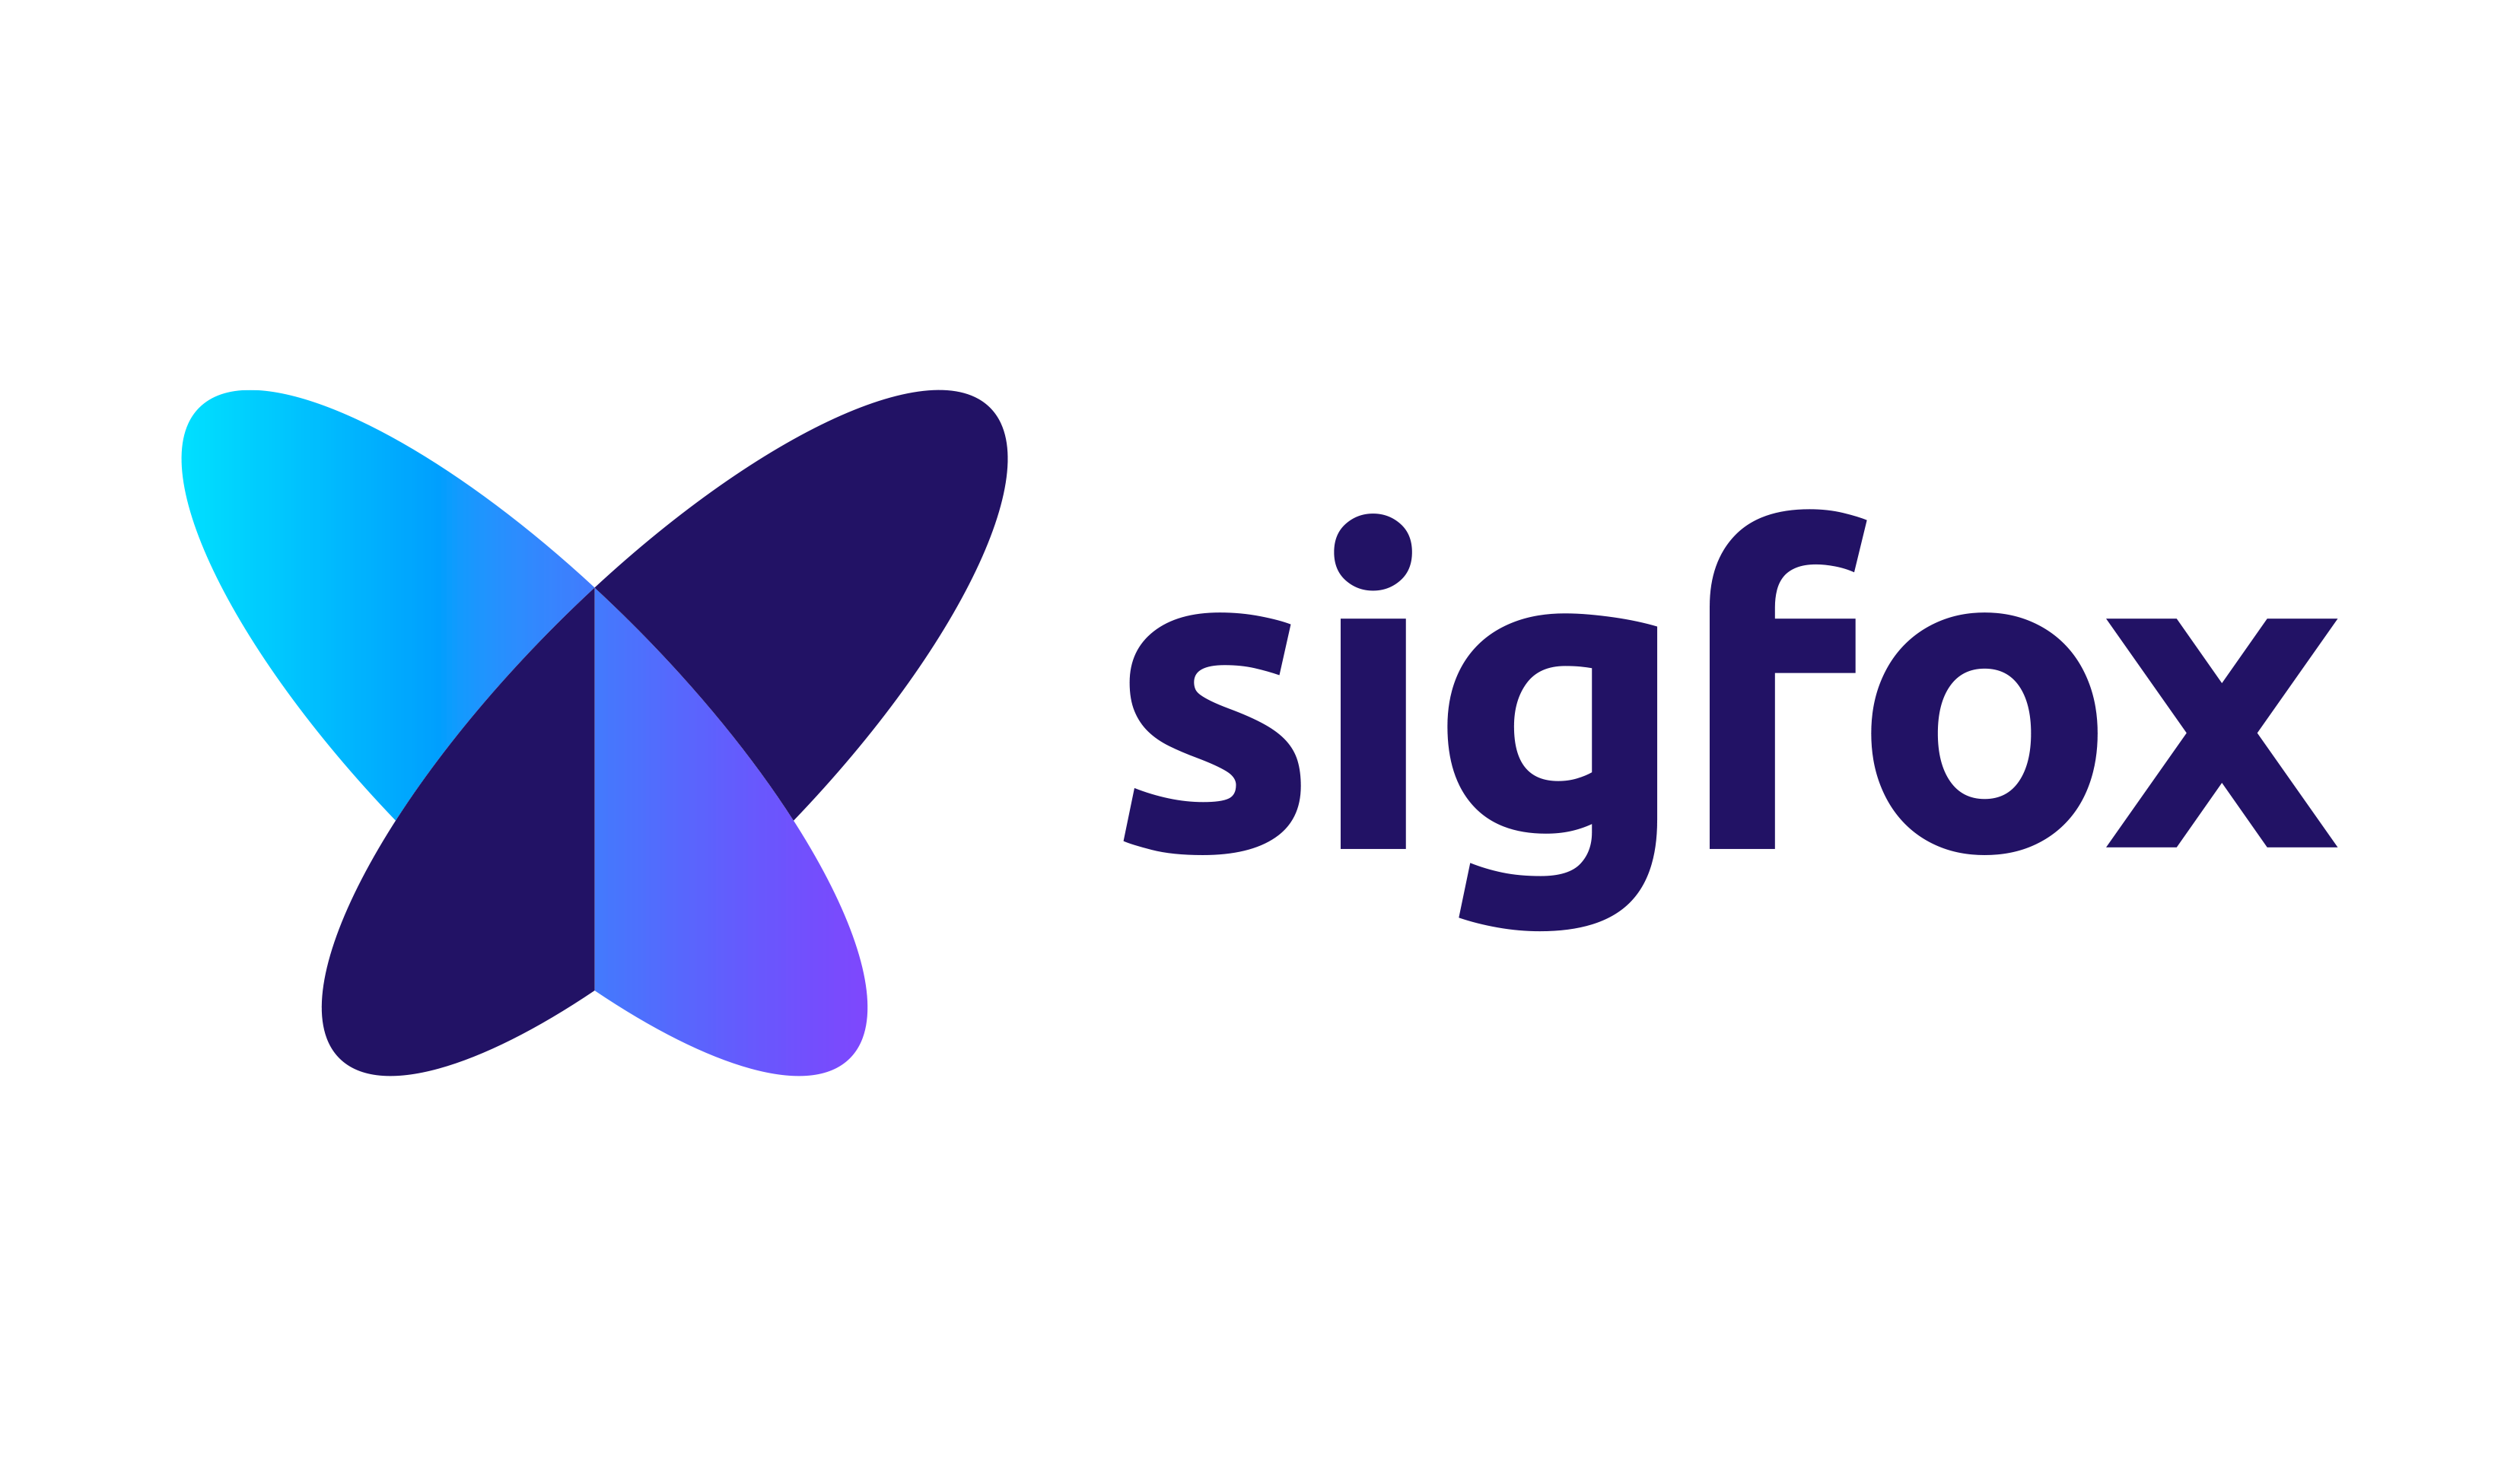 Sigfox Logo 